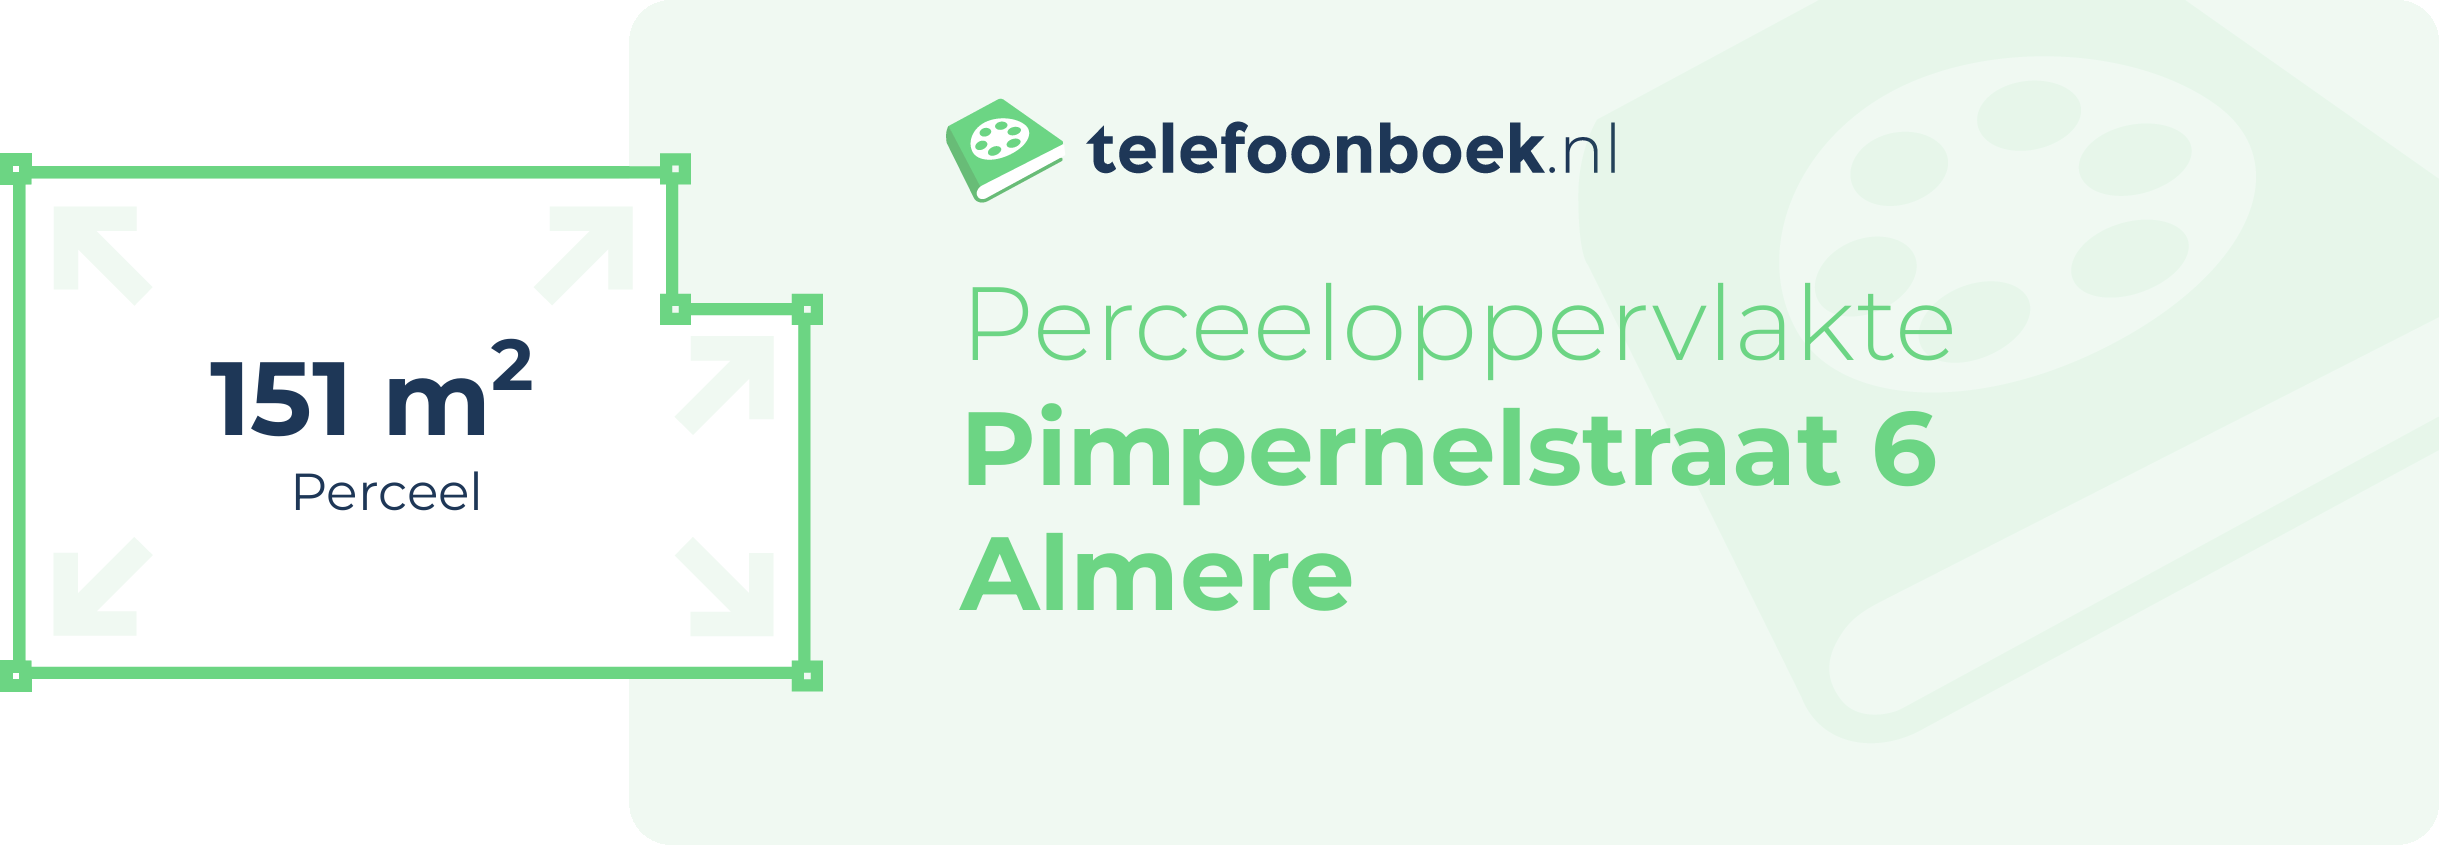 Perceeloppervlakte Pimpernelstraat 6 Almere